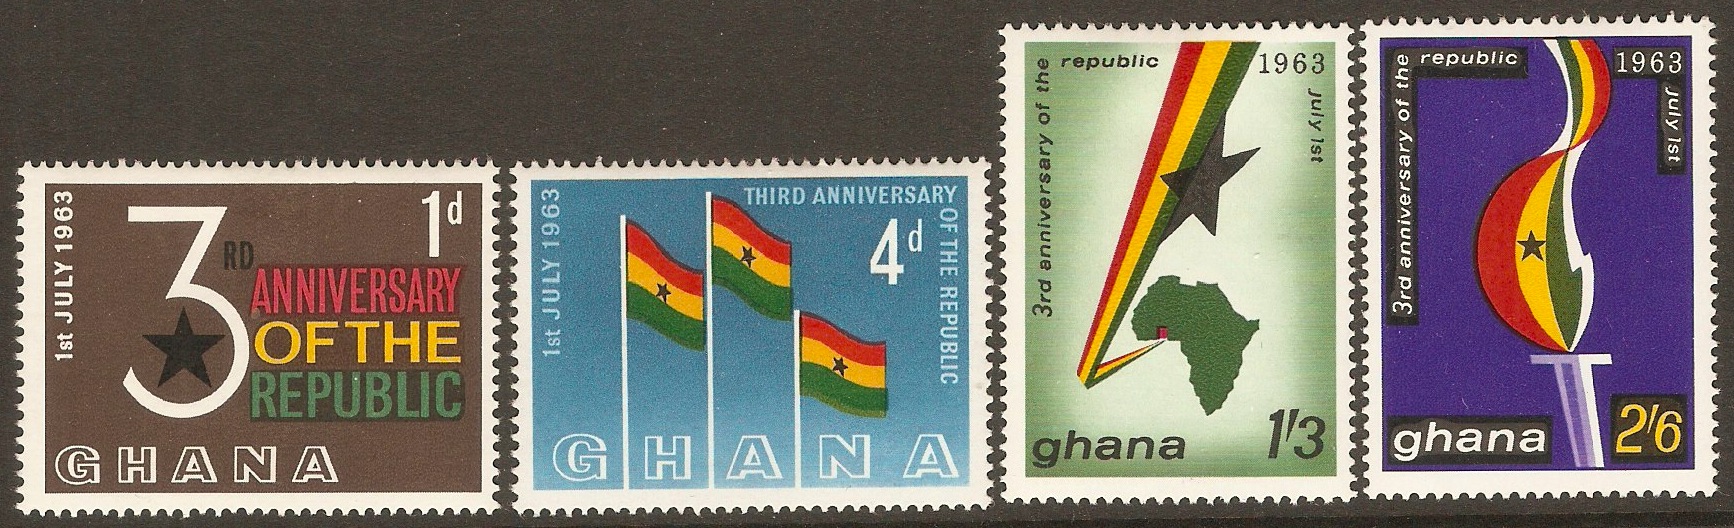 Ghana 1963 Republic Anniversary Set. SG311-SG314.